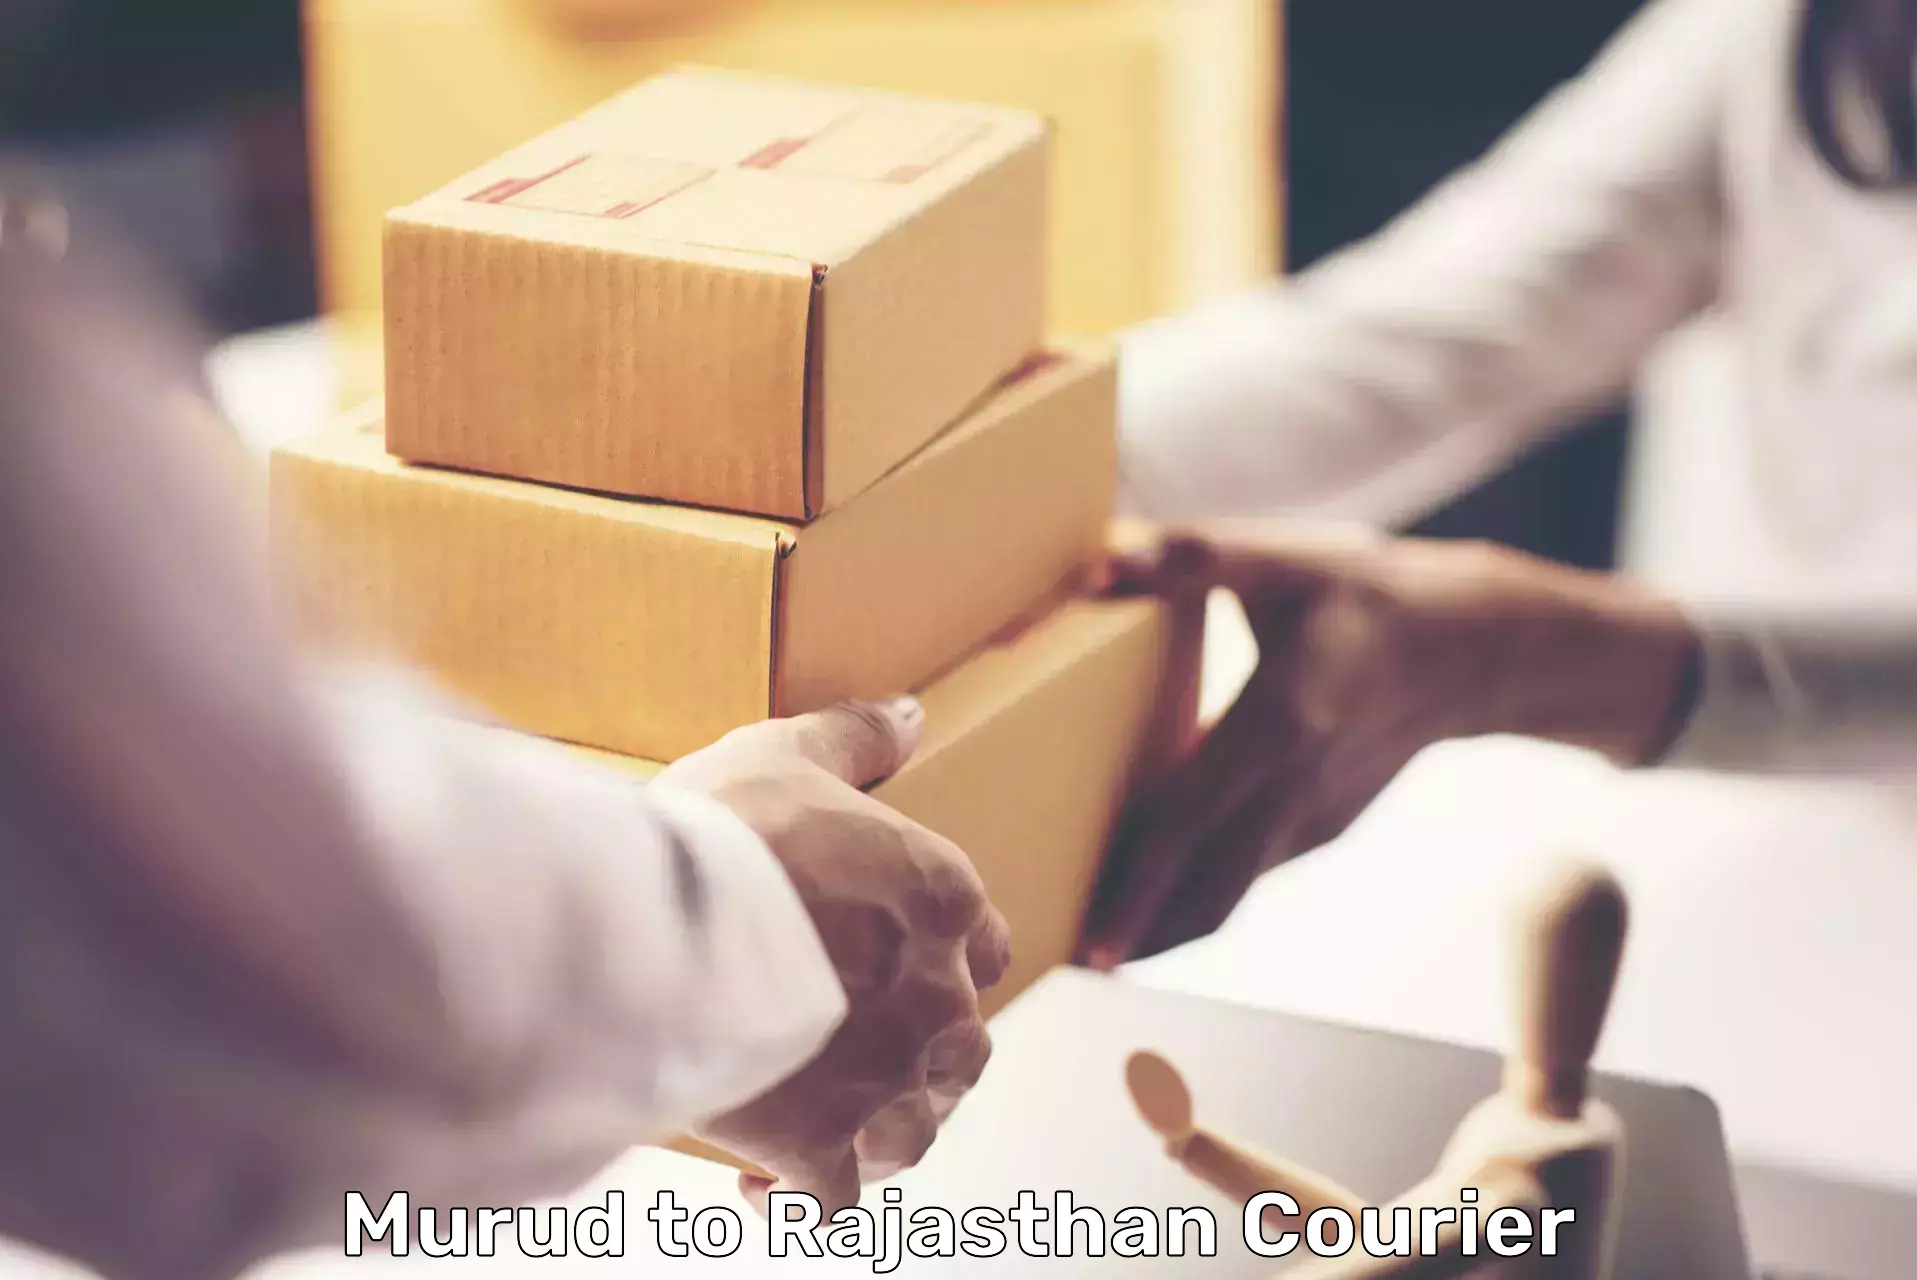 Courier service comparison in Murud to Sarada